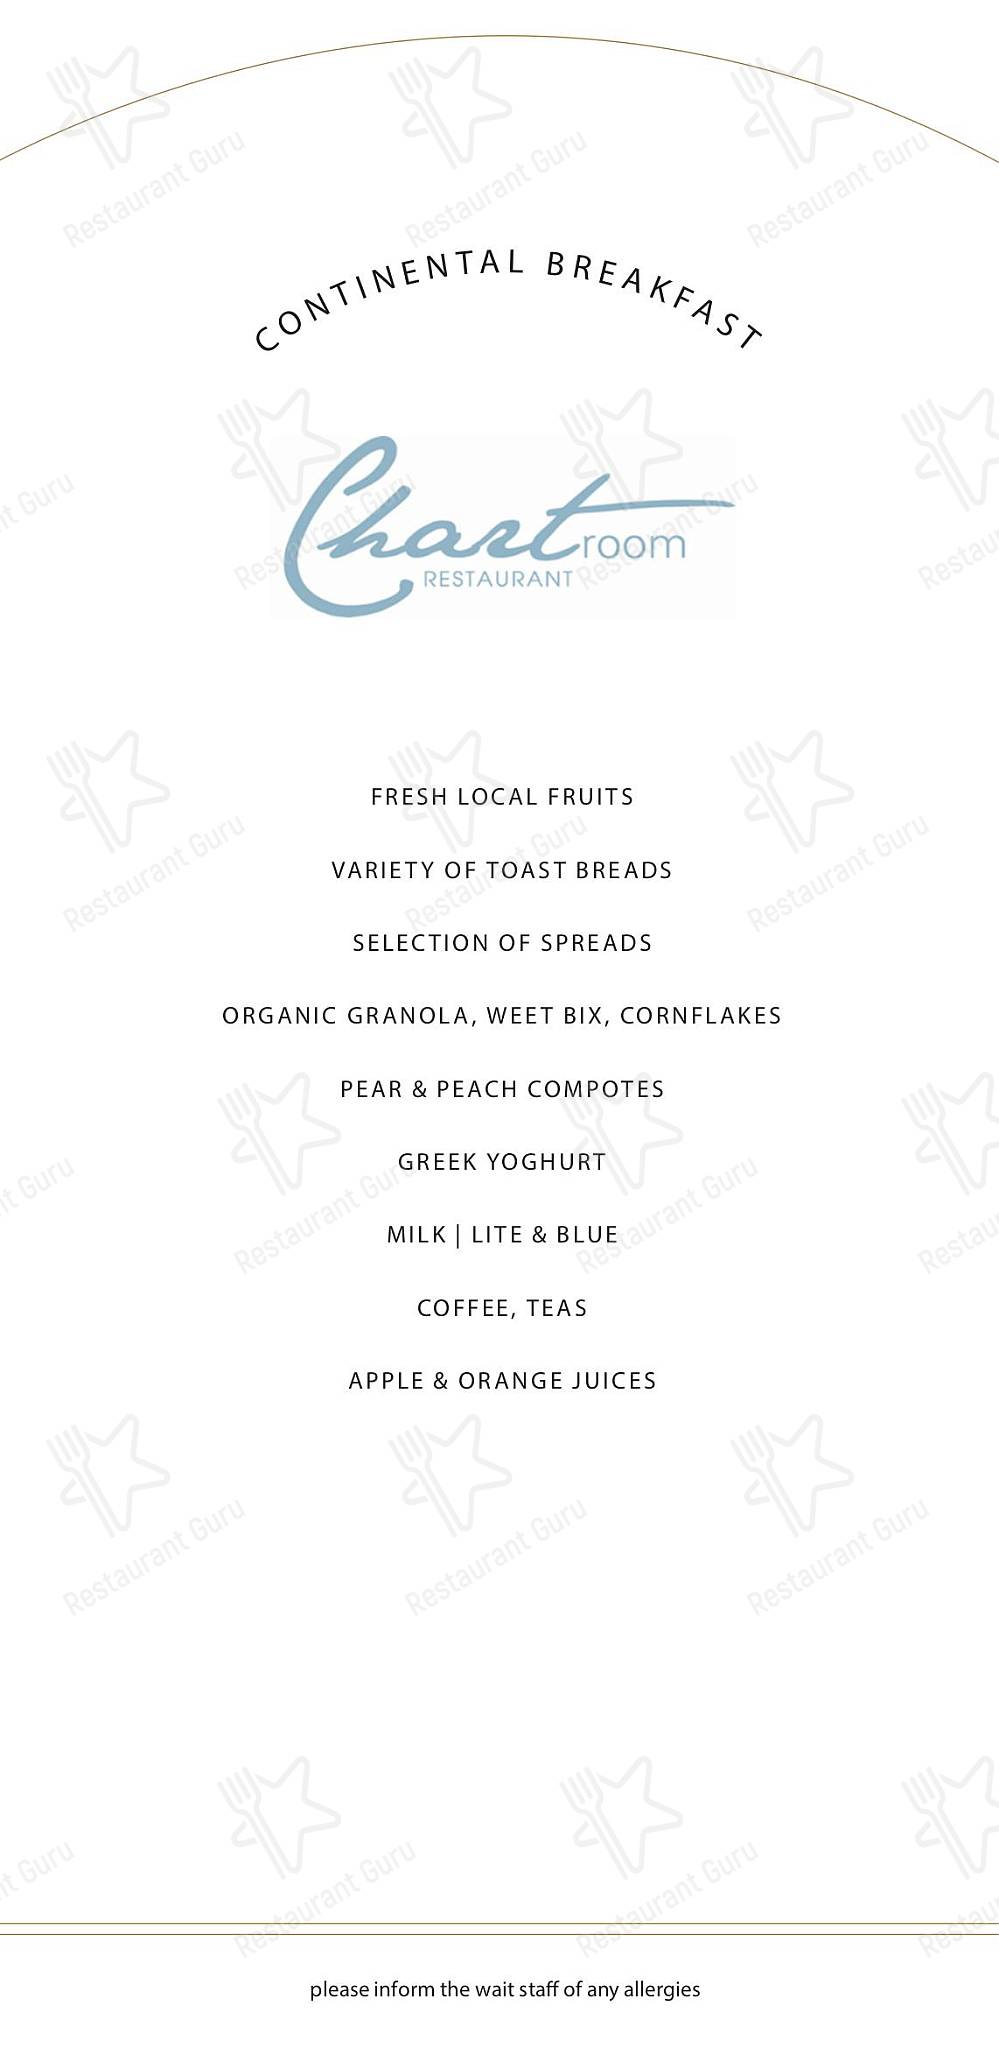 picton yacht club hotel menu